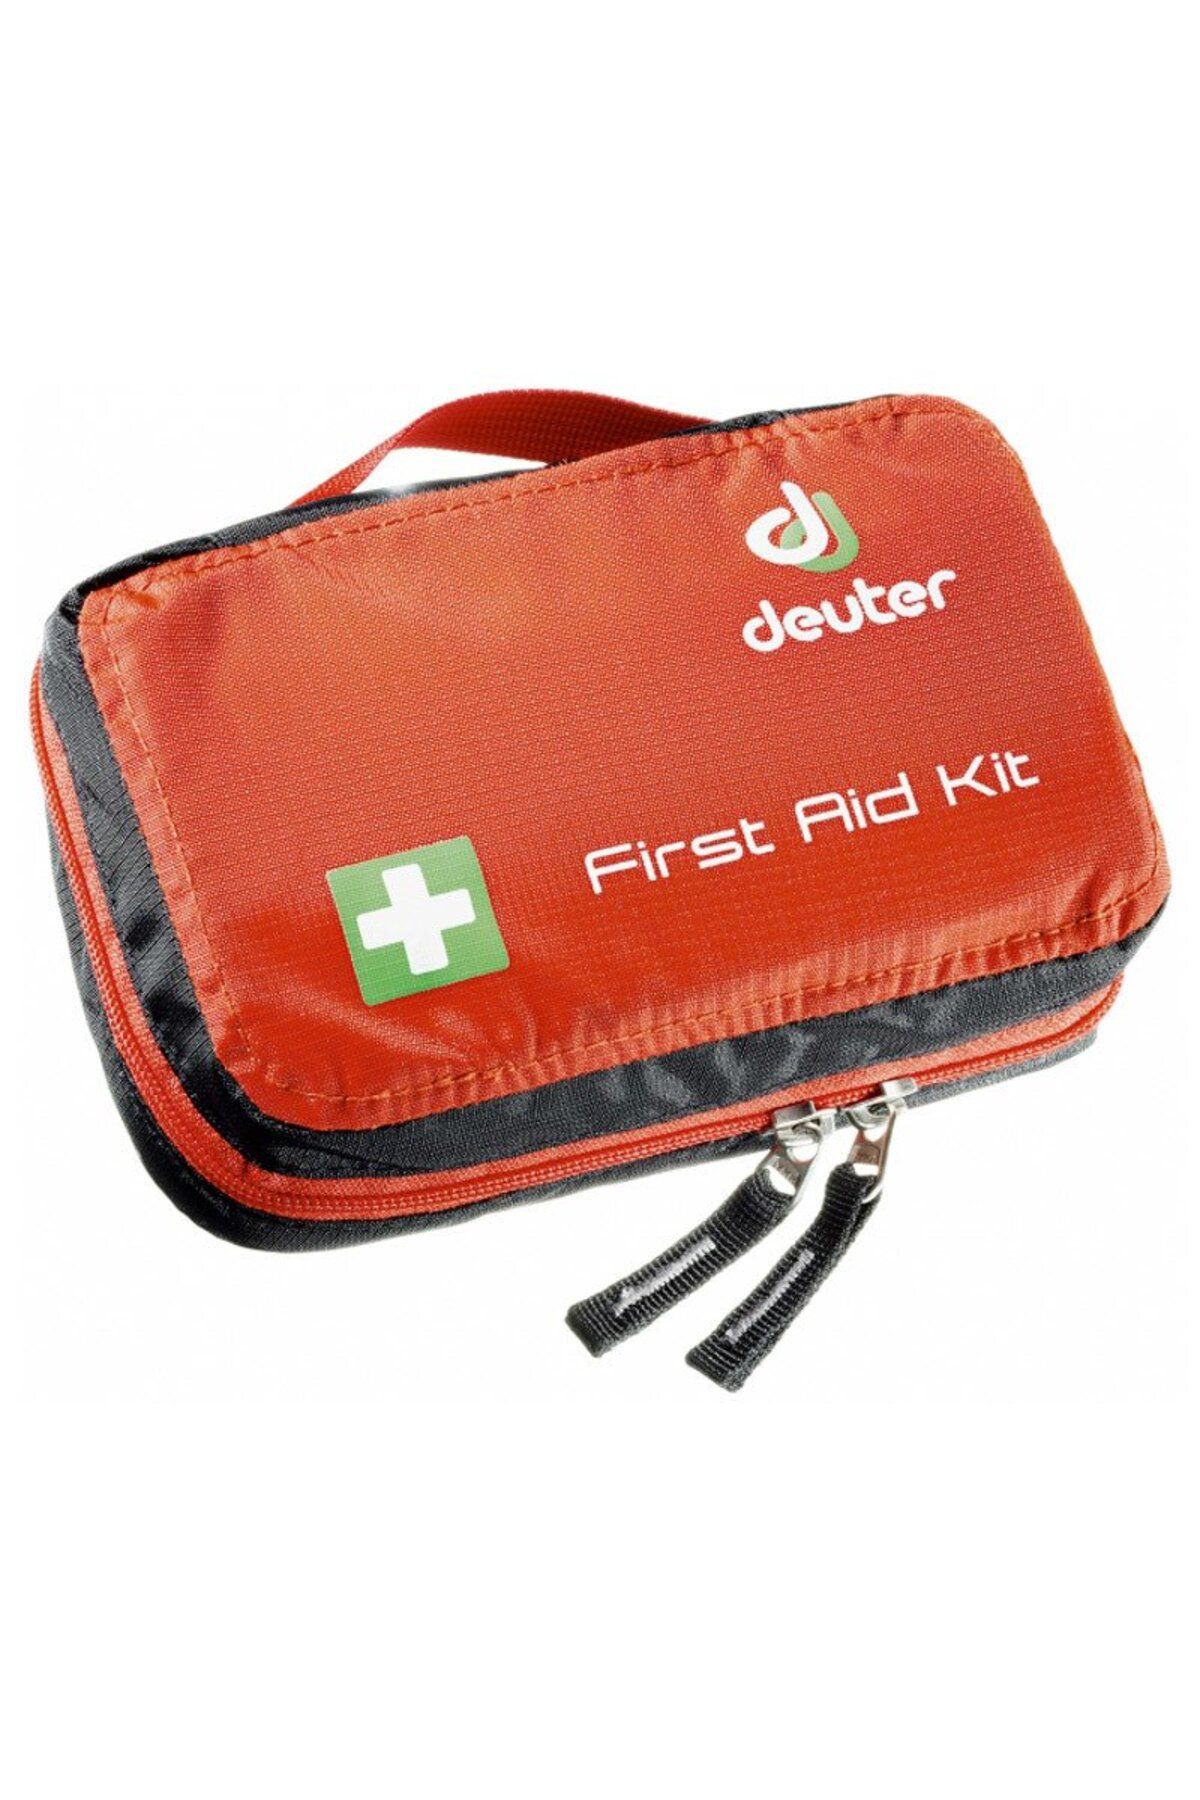 Deuter First Aid Kit Turuncu İlk Yardım Çanta 2485931